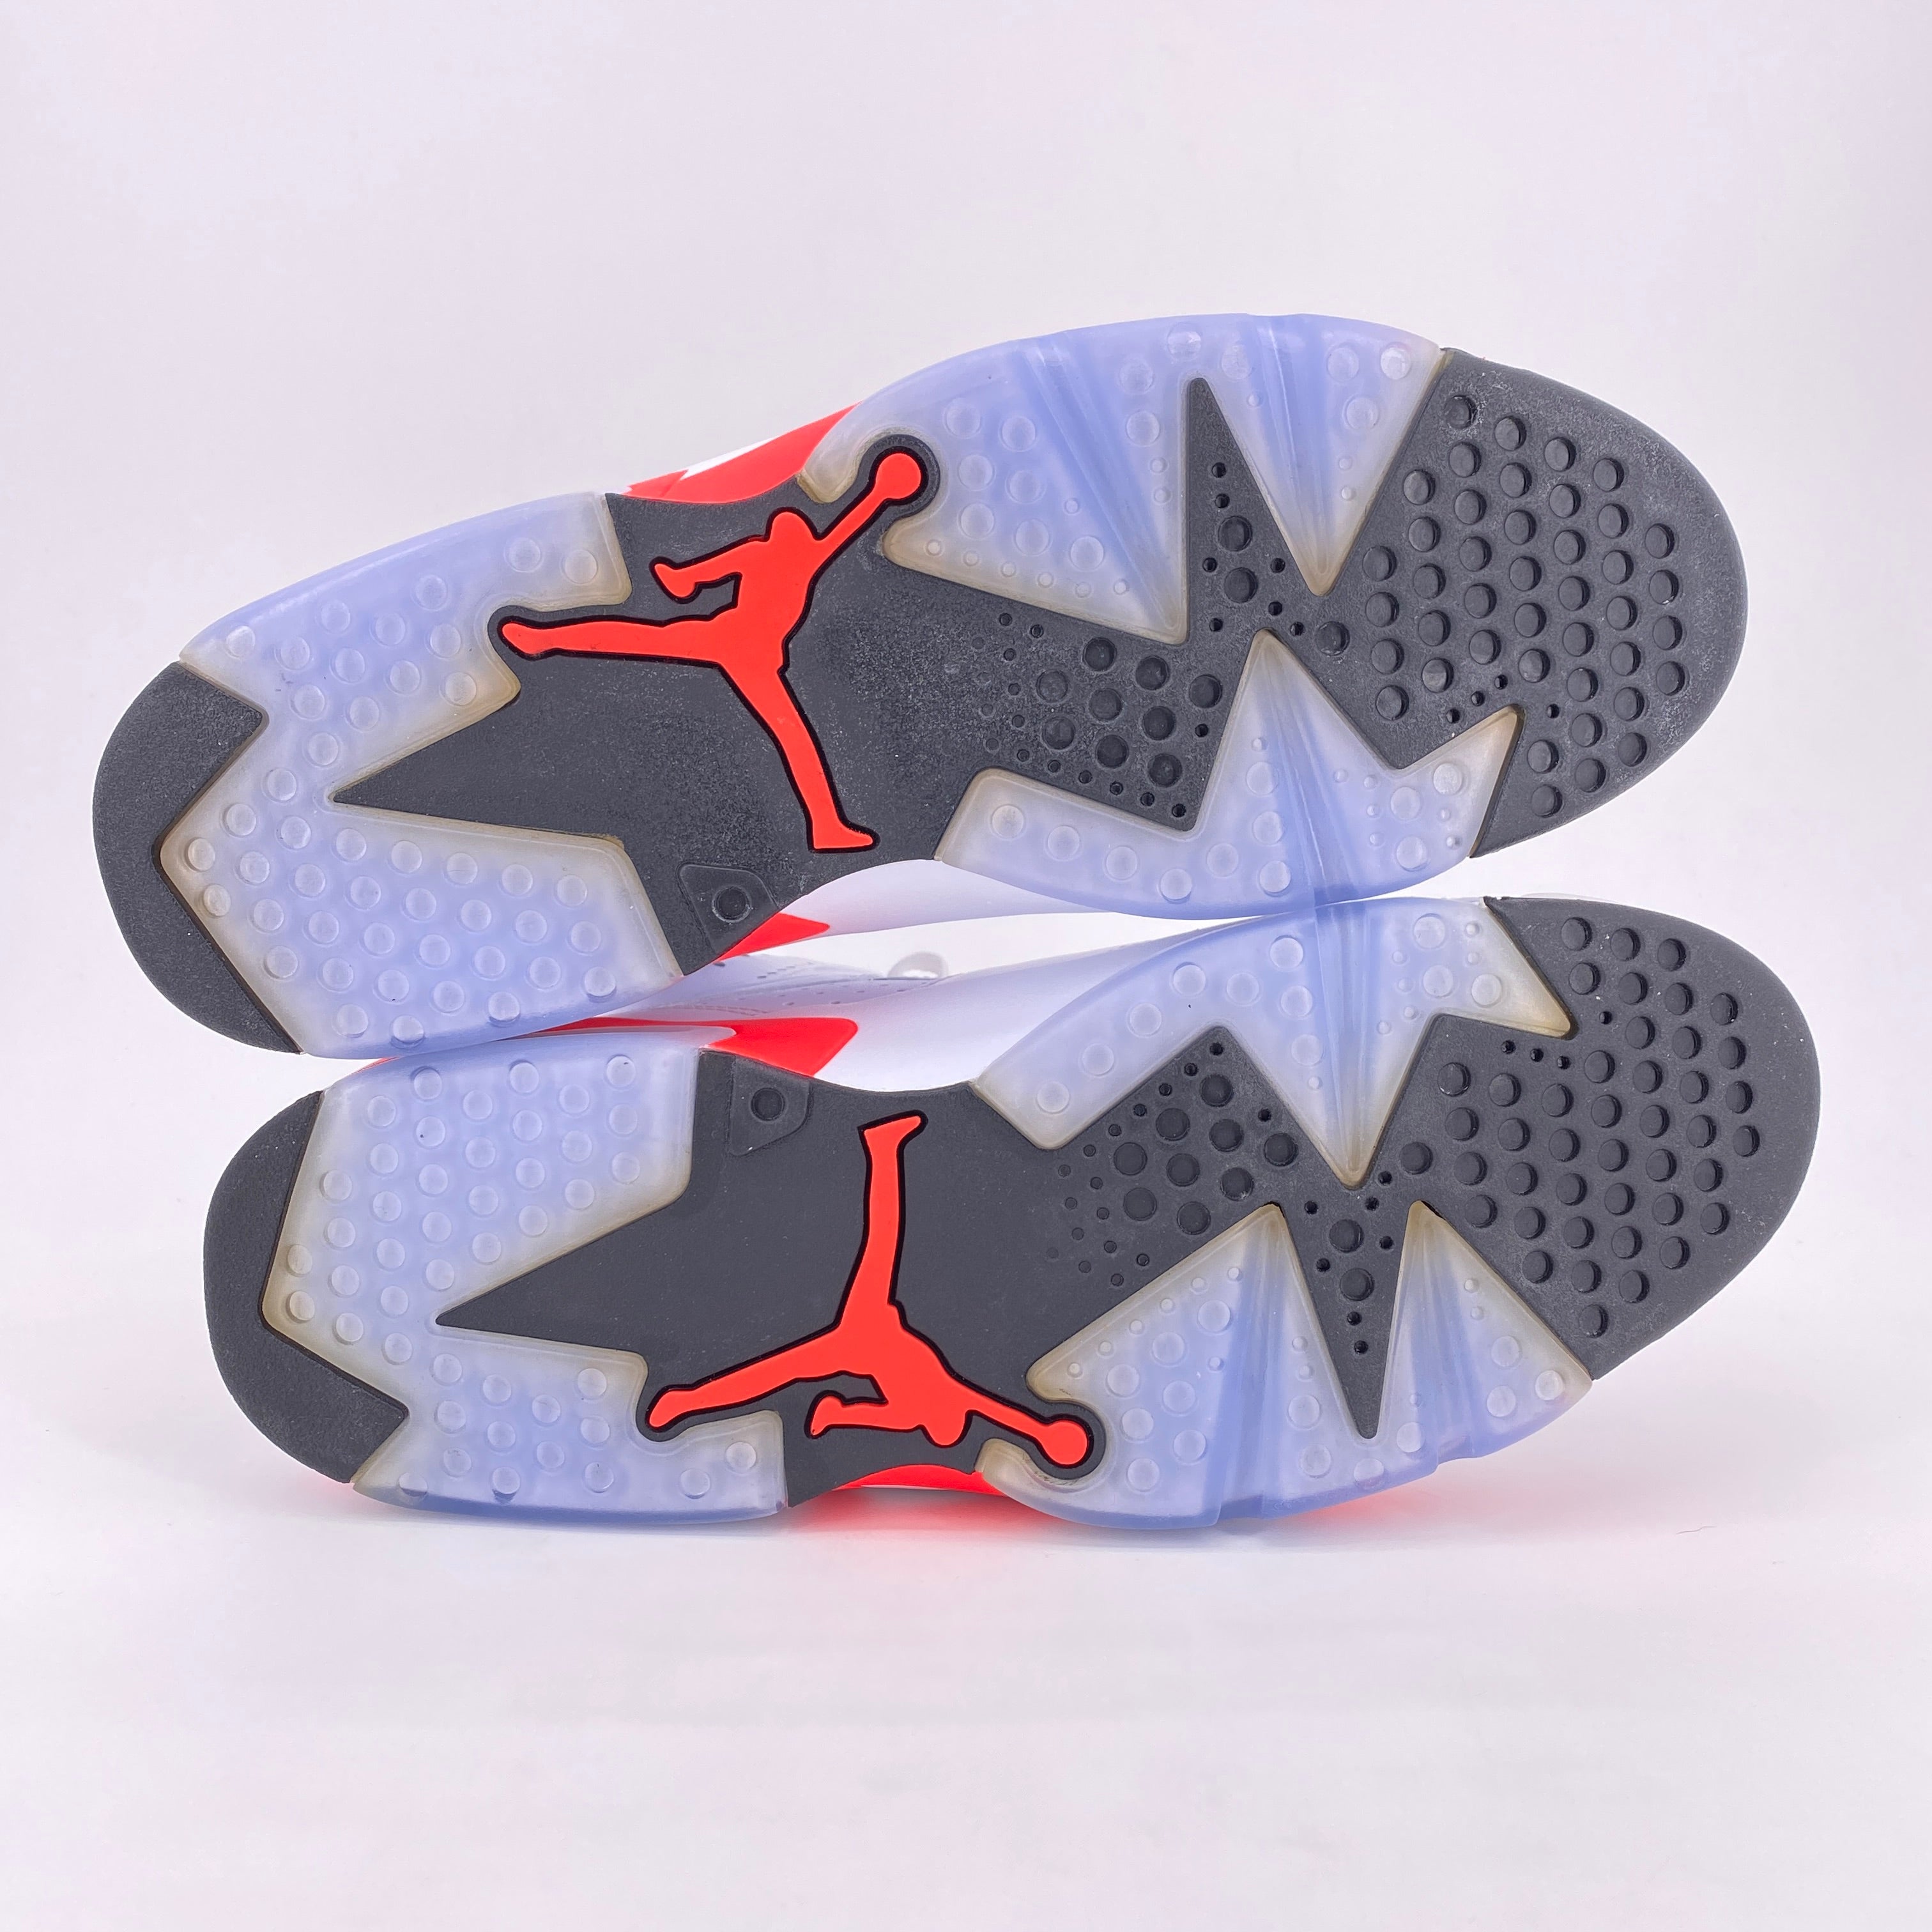 Air Jordan 6 Retro &quot;White Infrared&quot; 2014 New Size 11.5